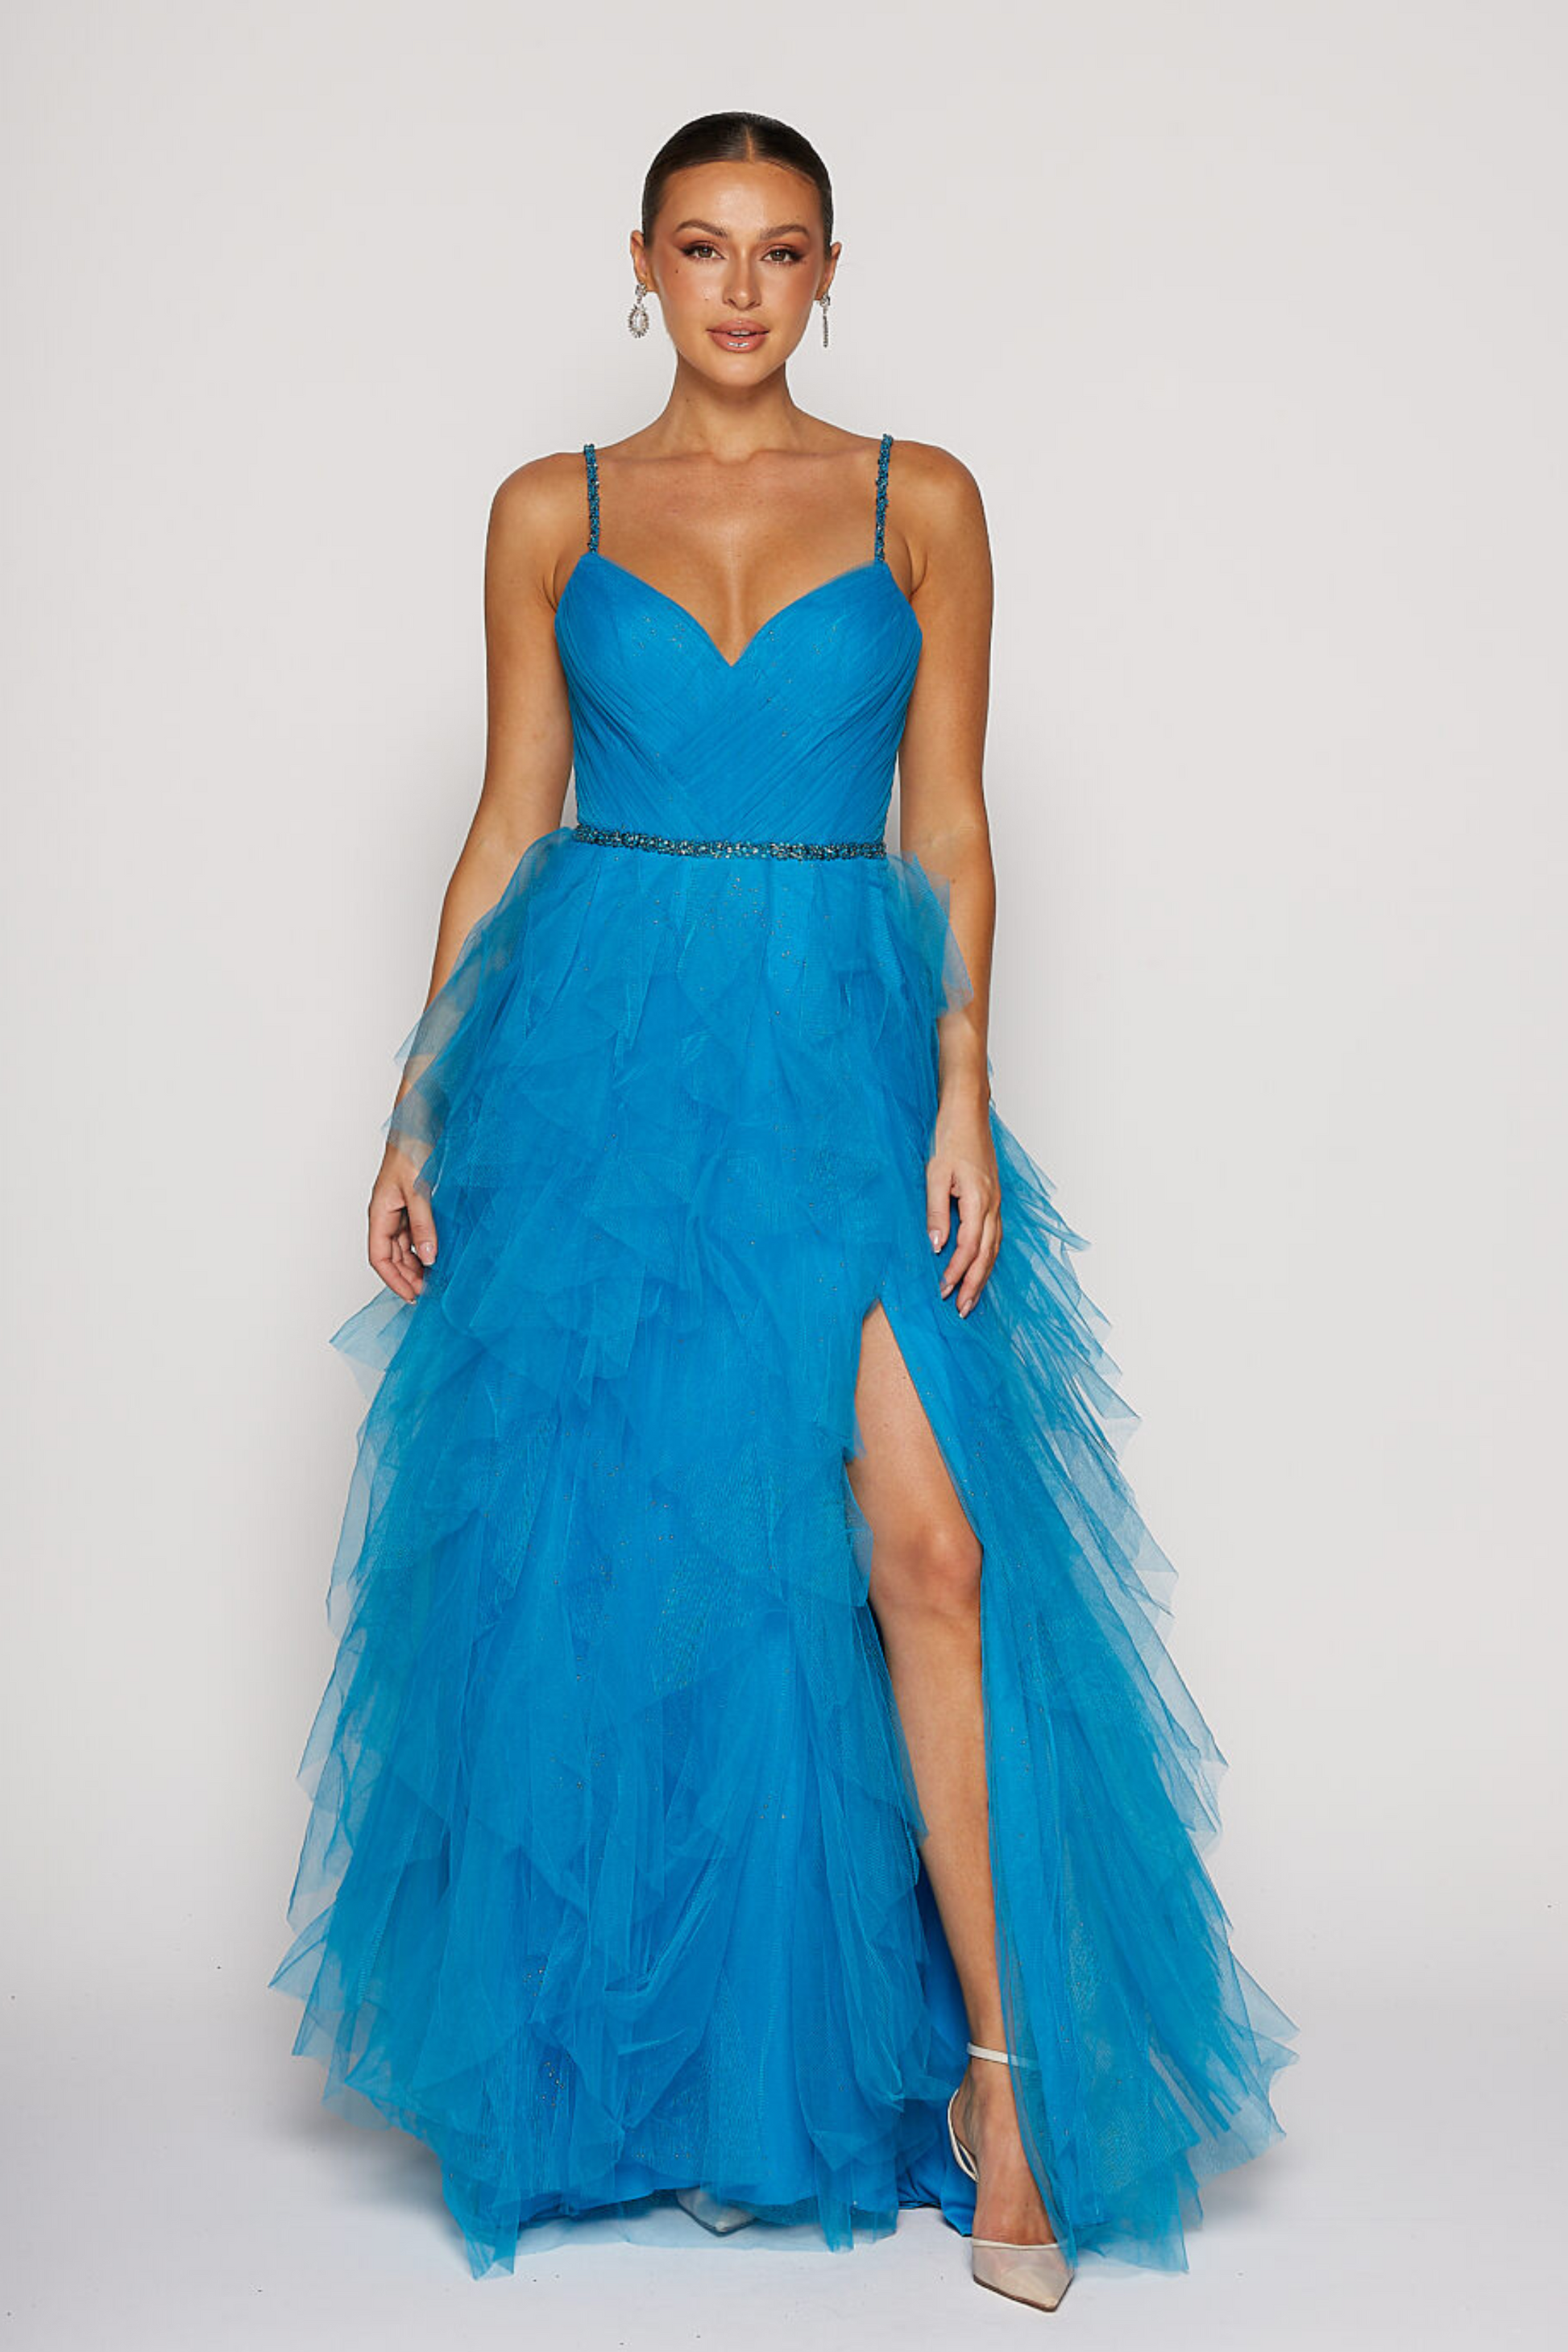 Tania Olsen a-line formal dress in blue ruffle tulle